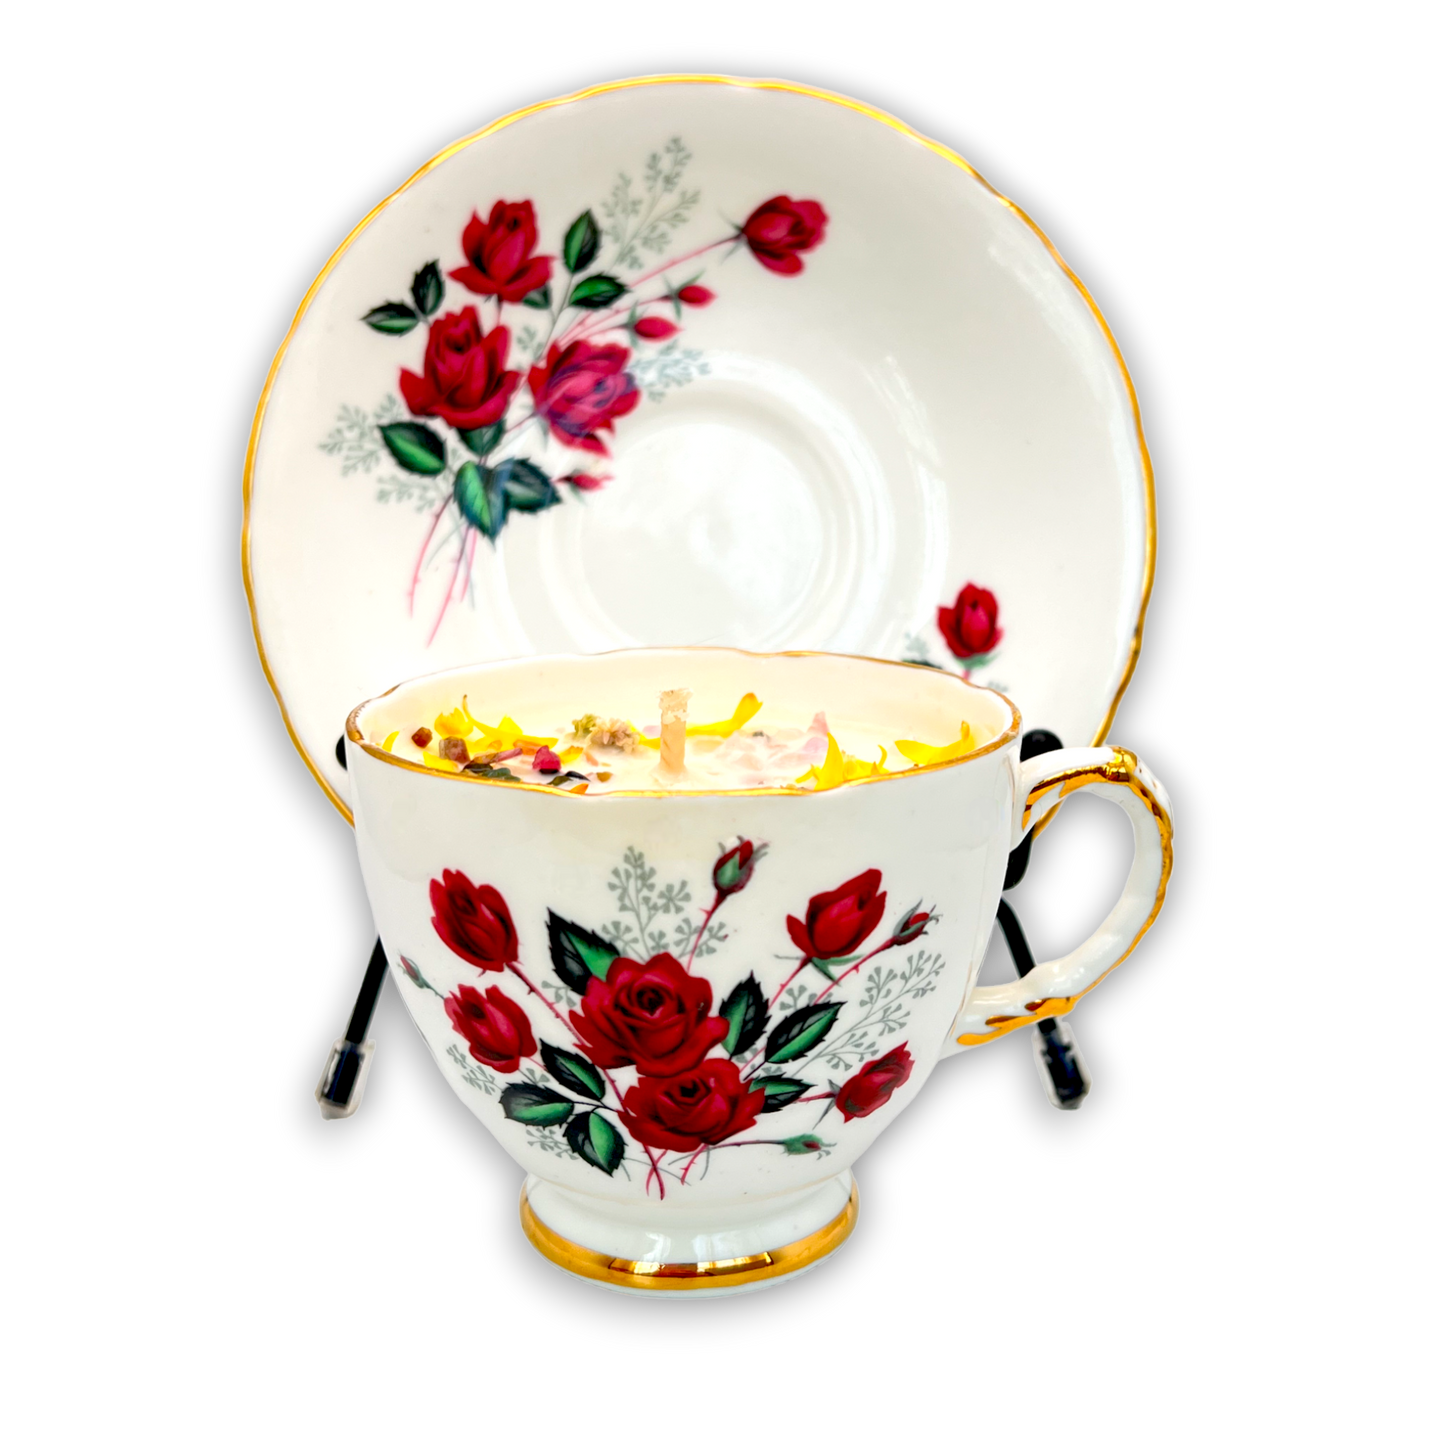 British Delphine Vintage Teacup Candle